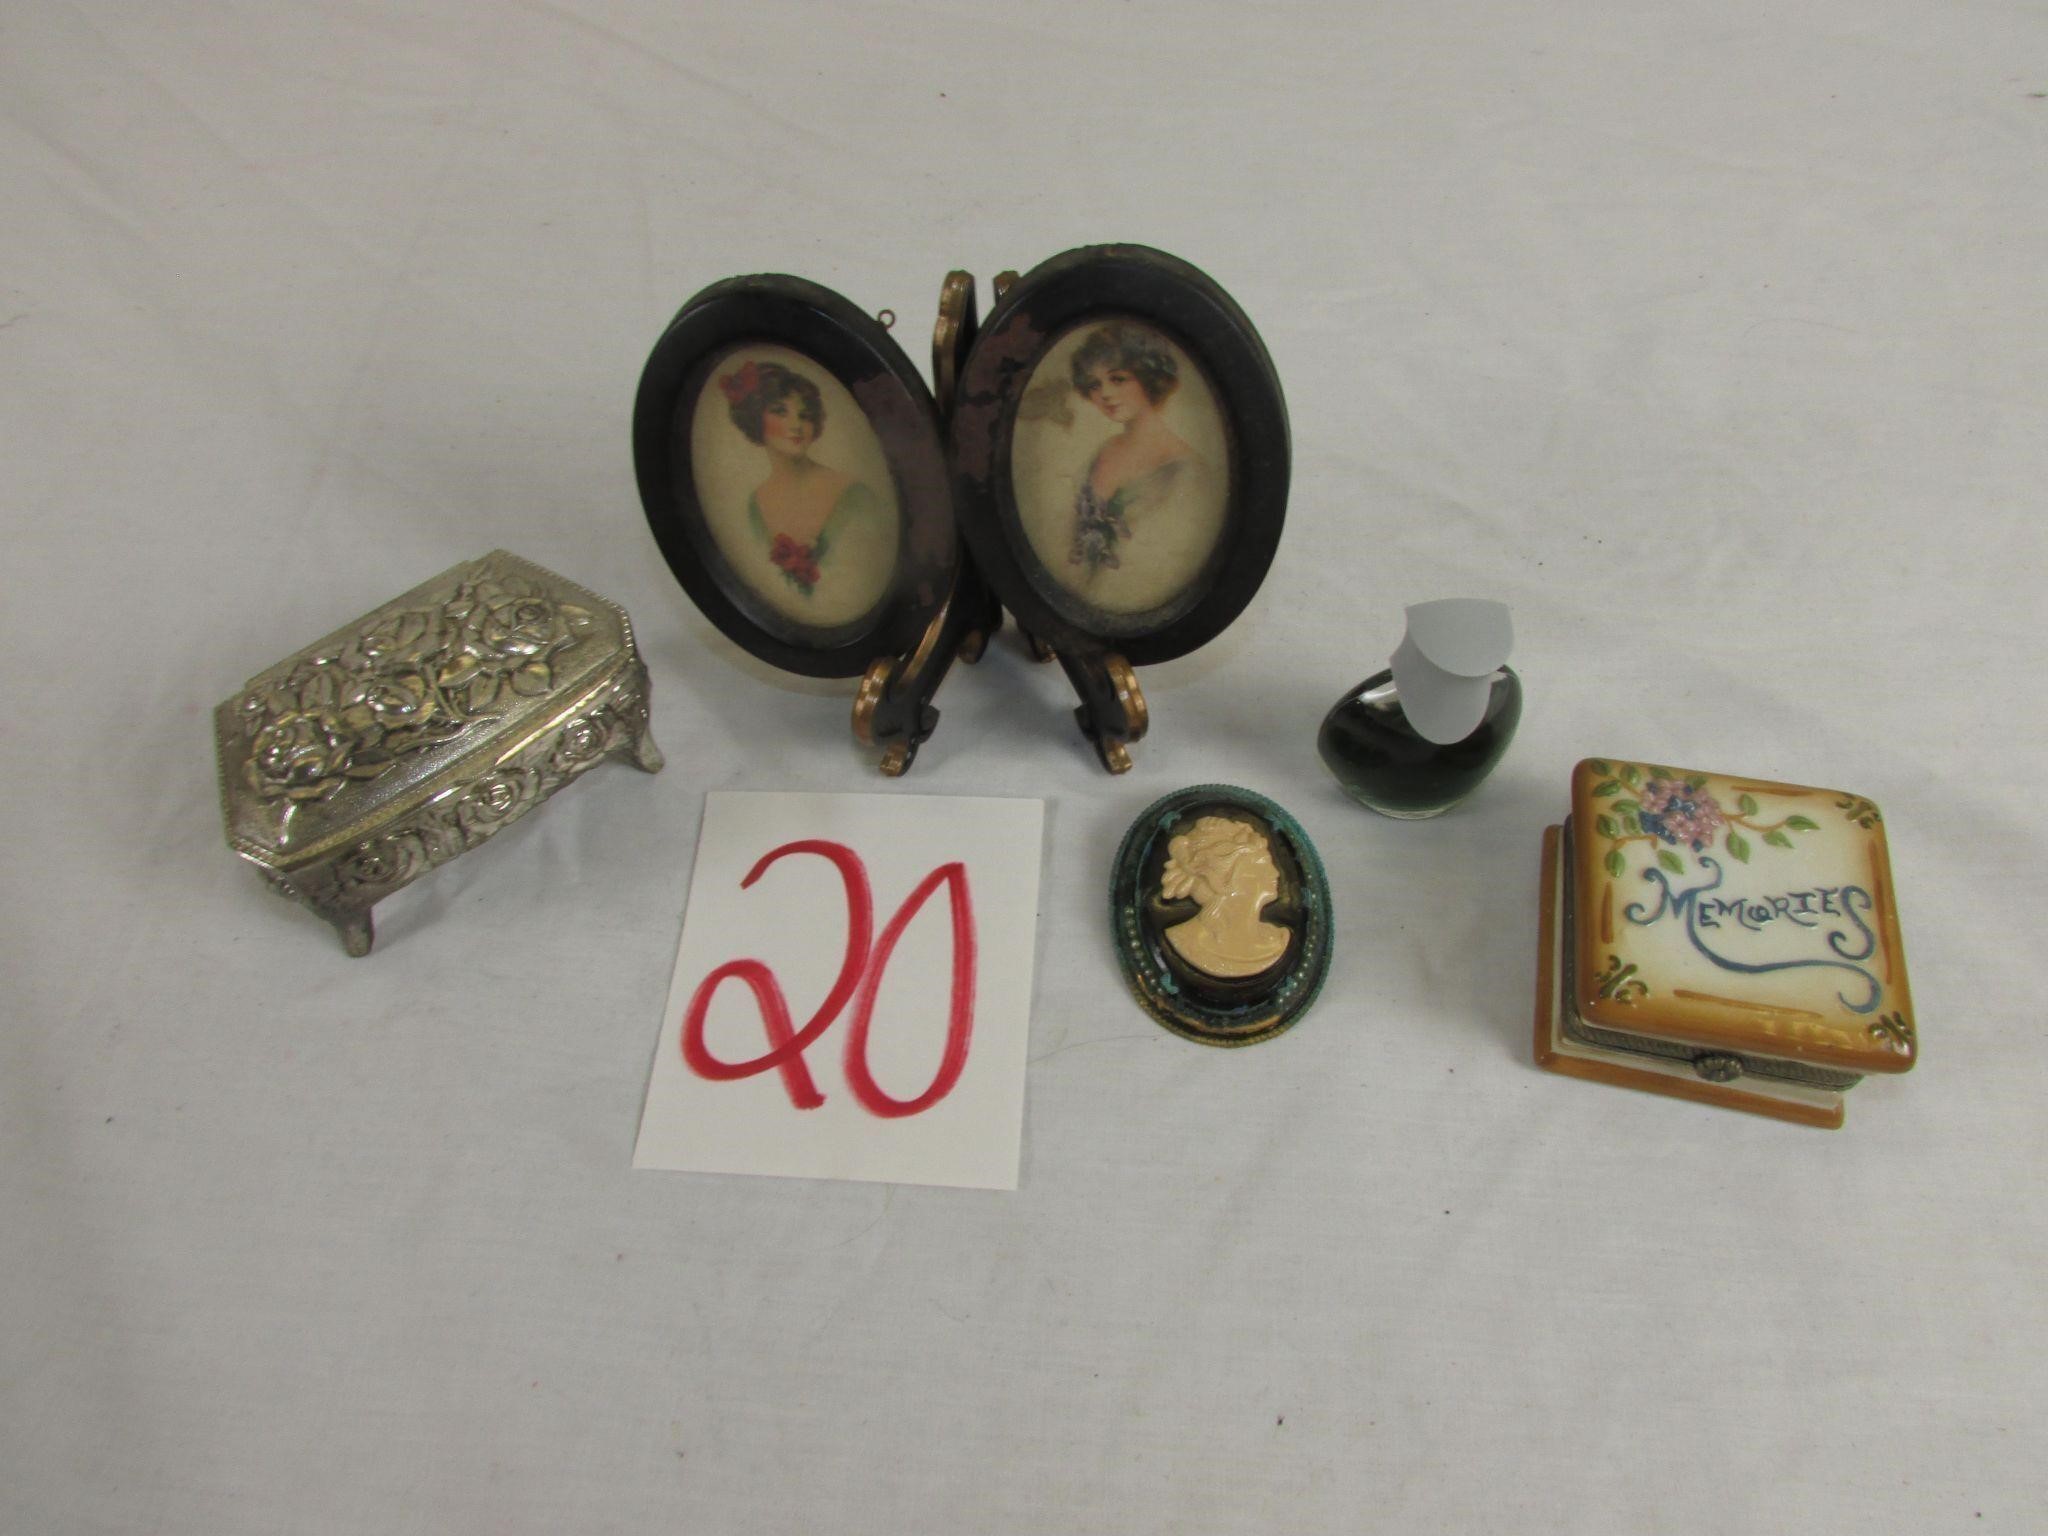 Dresser Items - Vintage Cameo Pin - Trinket Boxes